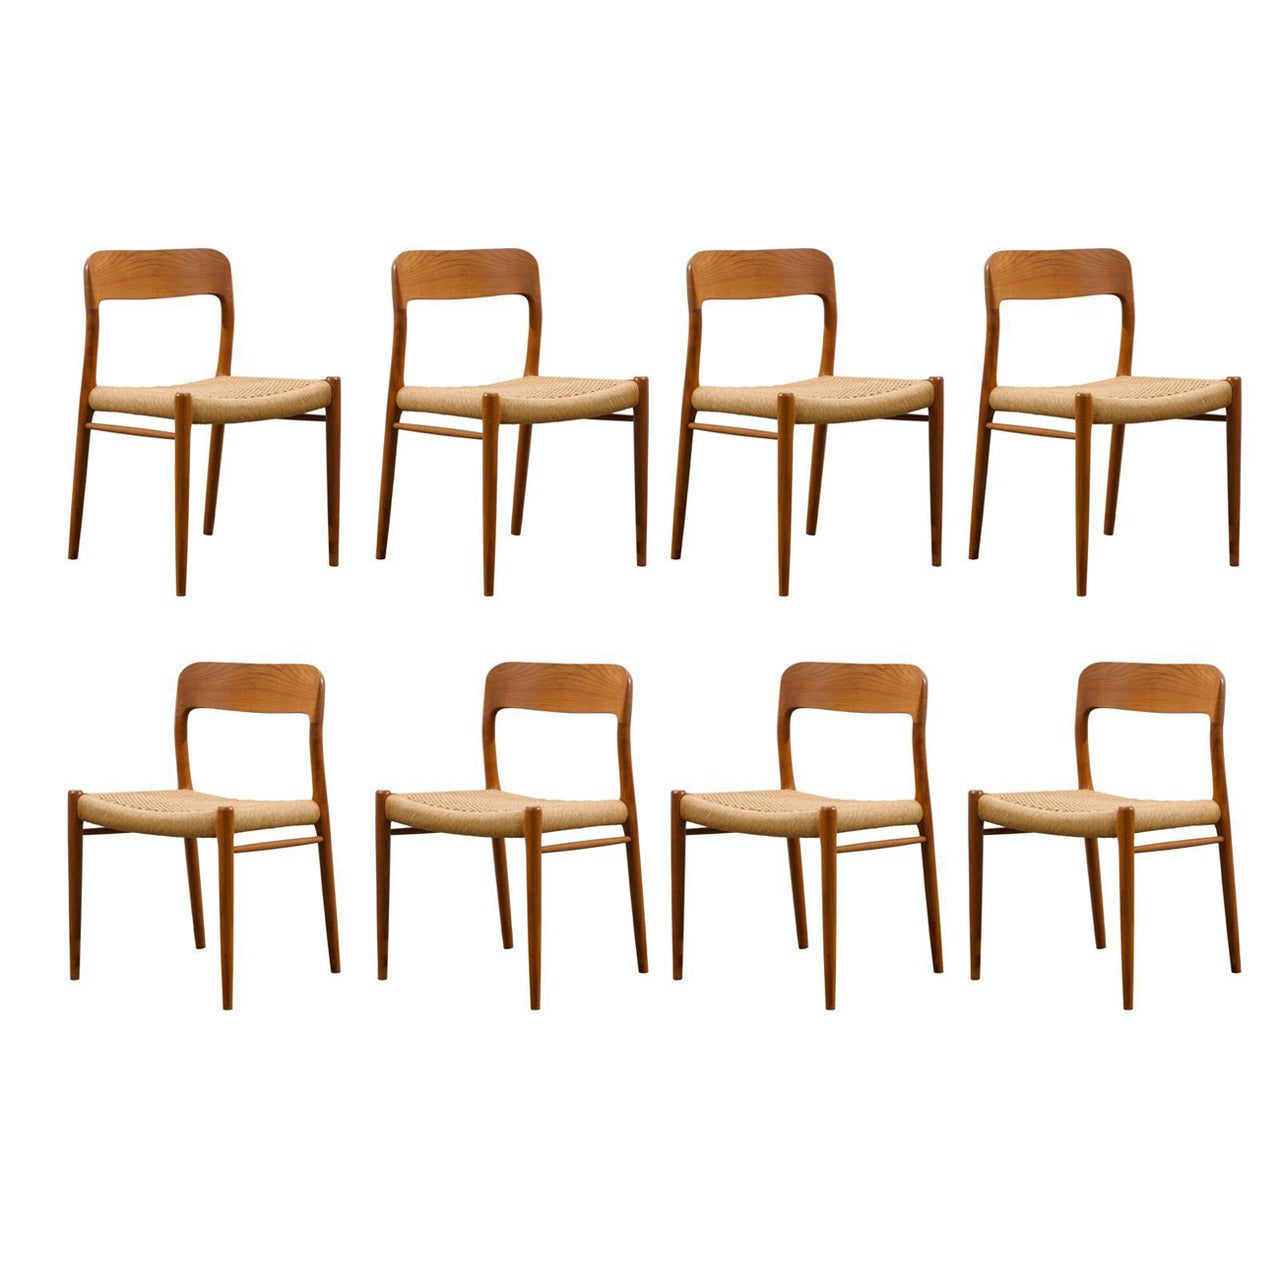 Stellar Original Set of Eight Moller #75 Chairs in Teak